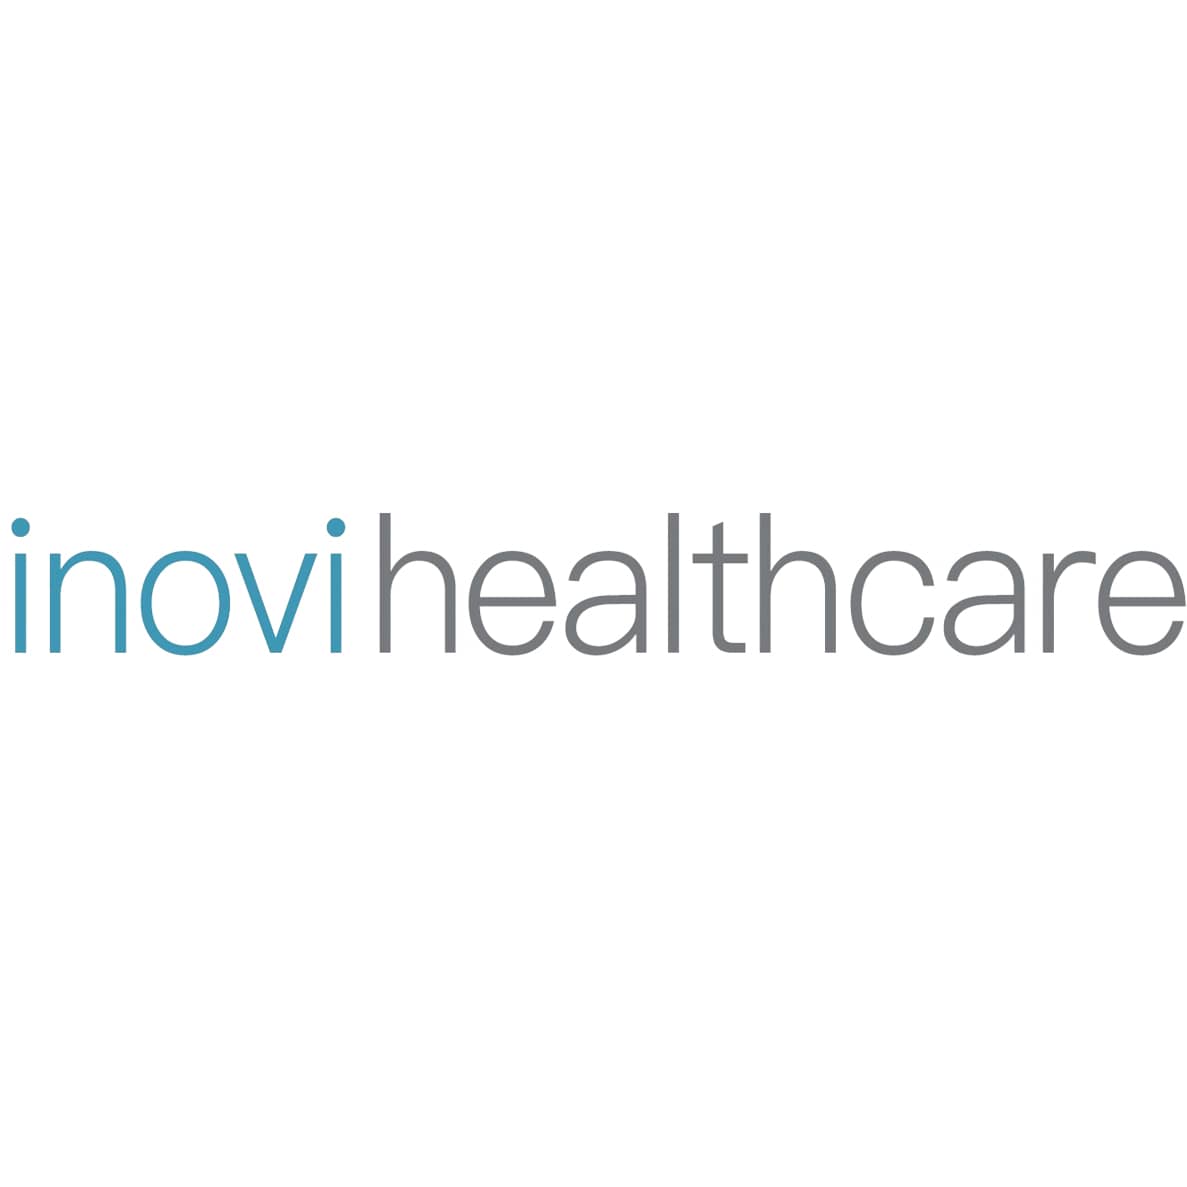 Inovi Healthcare Logo